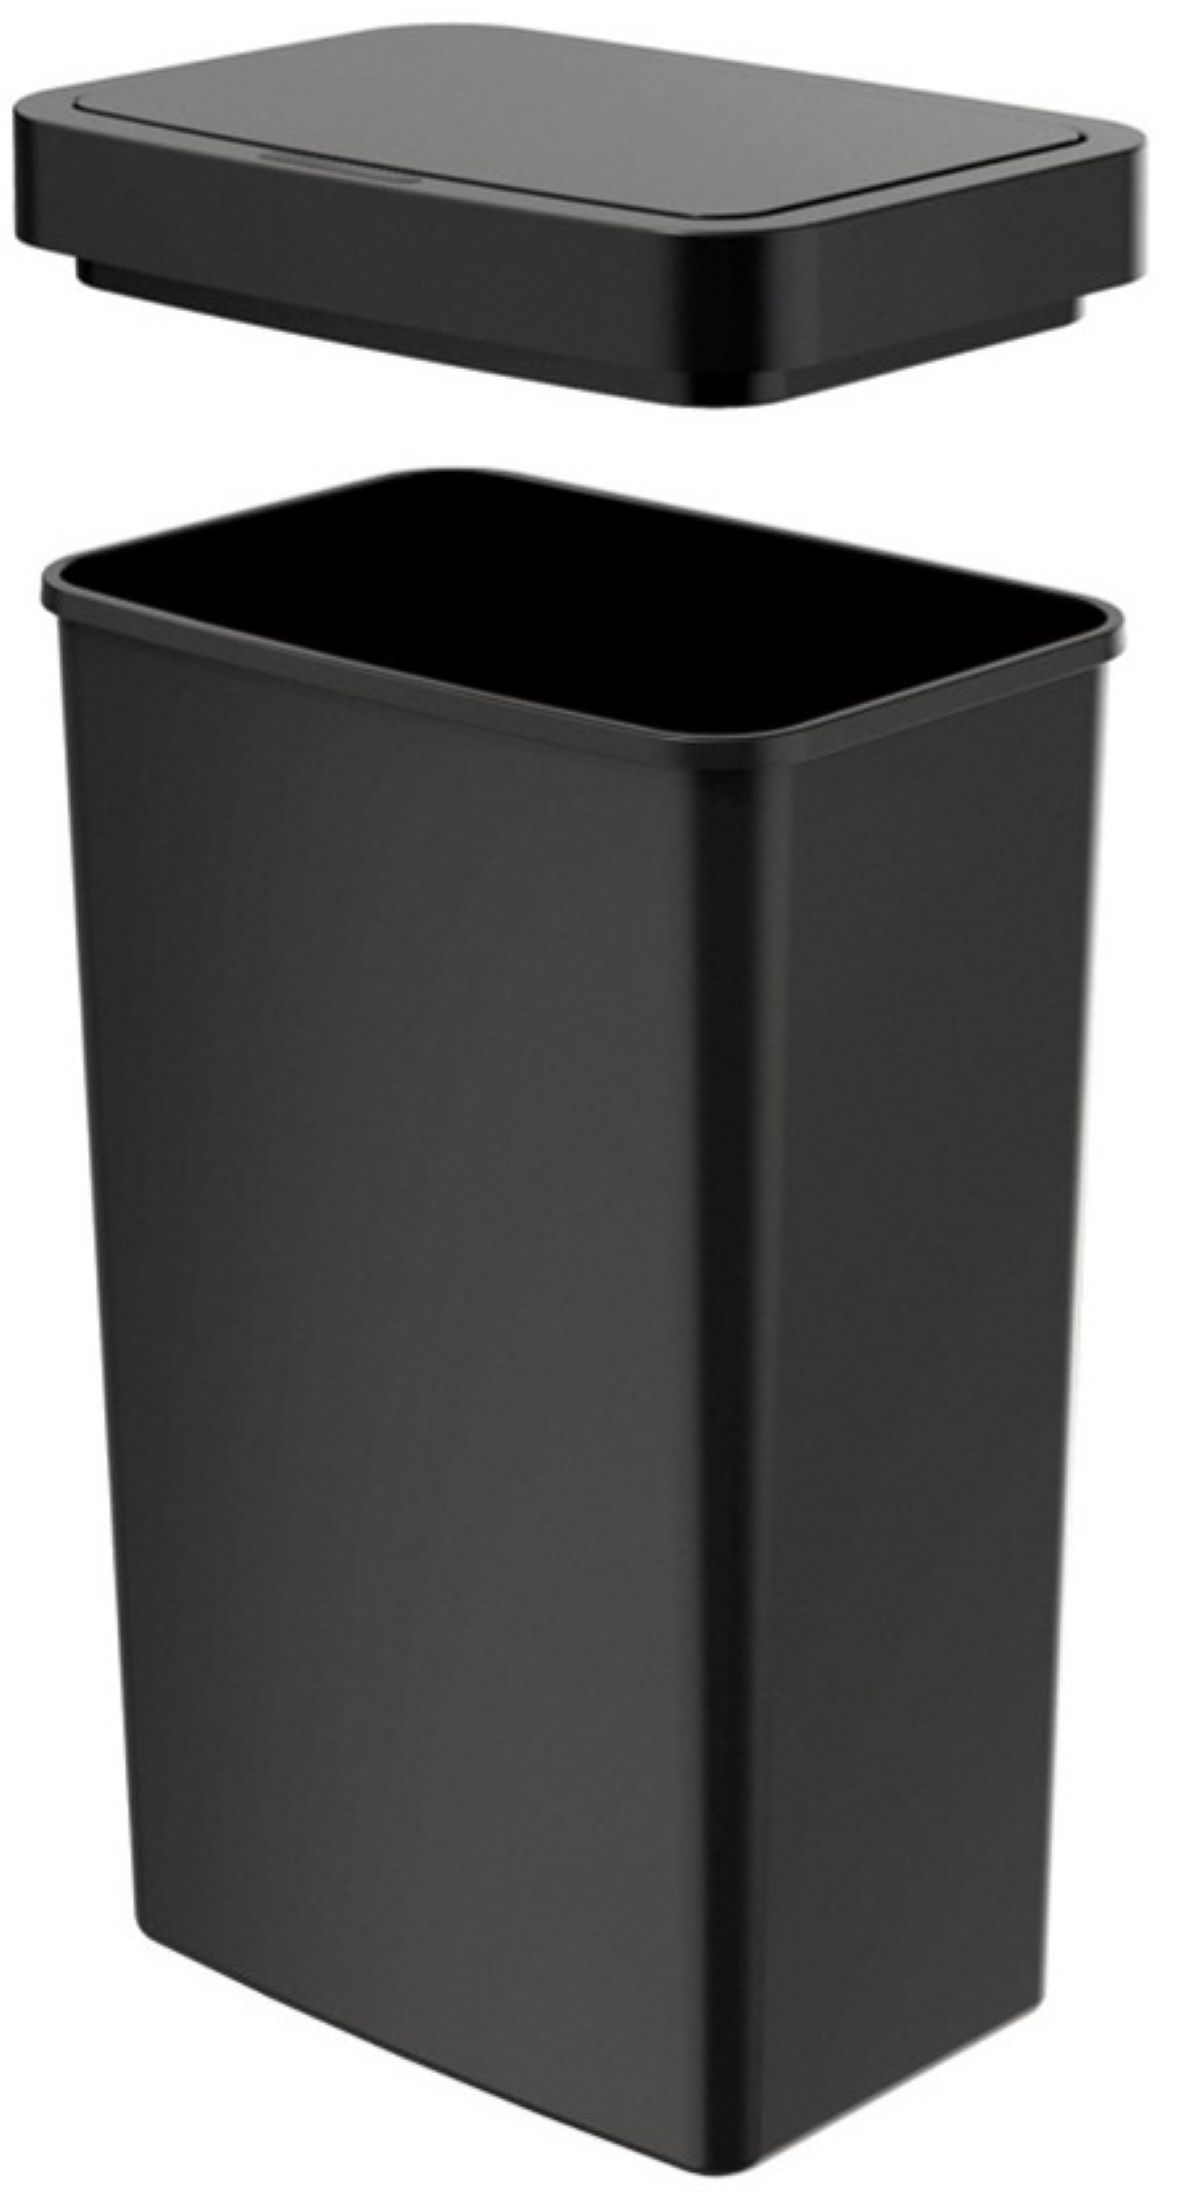 Mainstays 13.2 Gallon Trash Can, Plastic Motion Sensor Kitchen Trash Can, Black - image 4 of 12